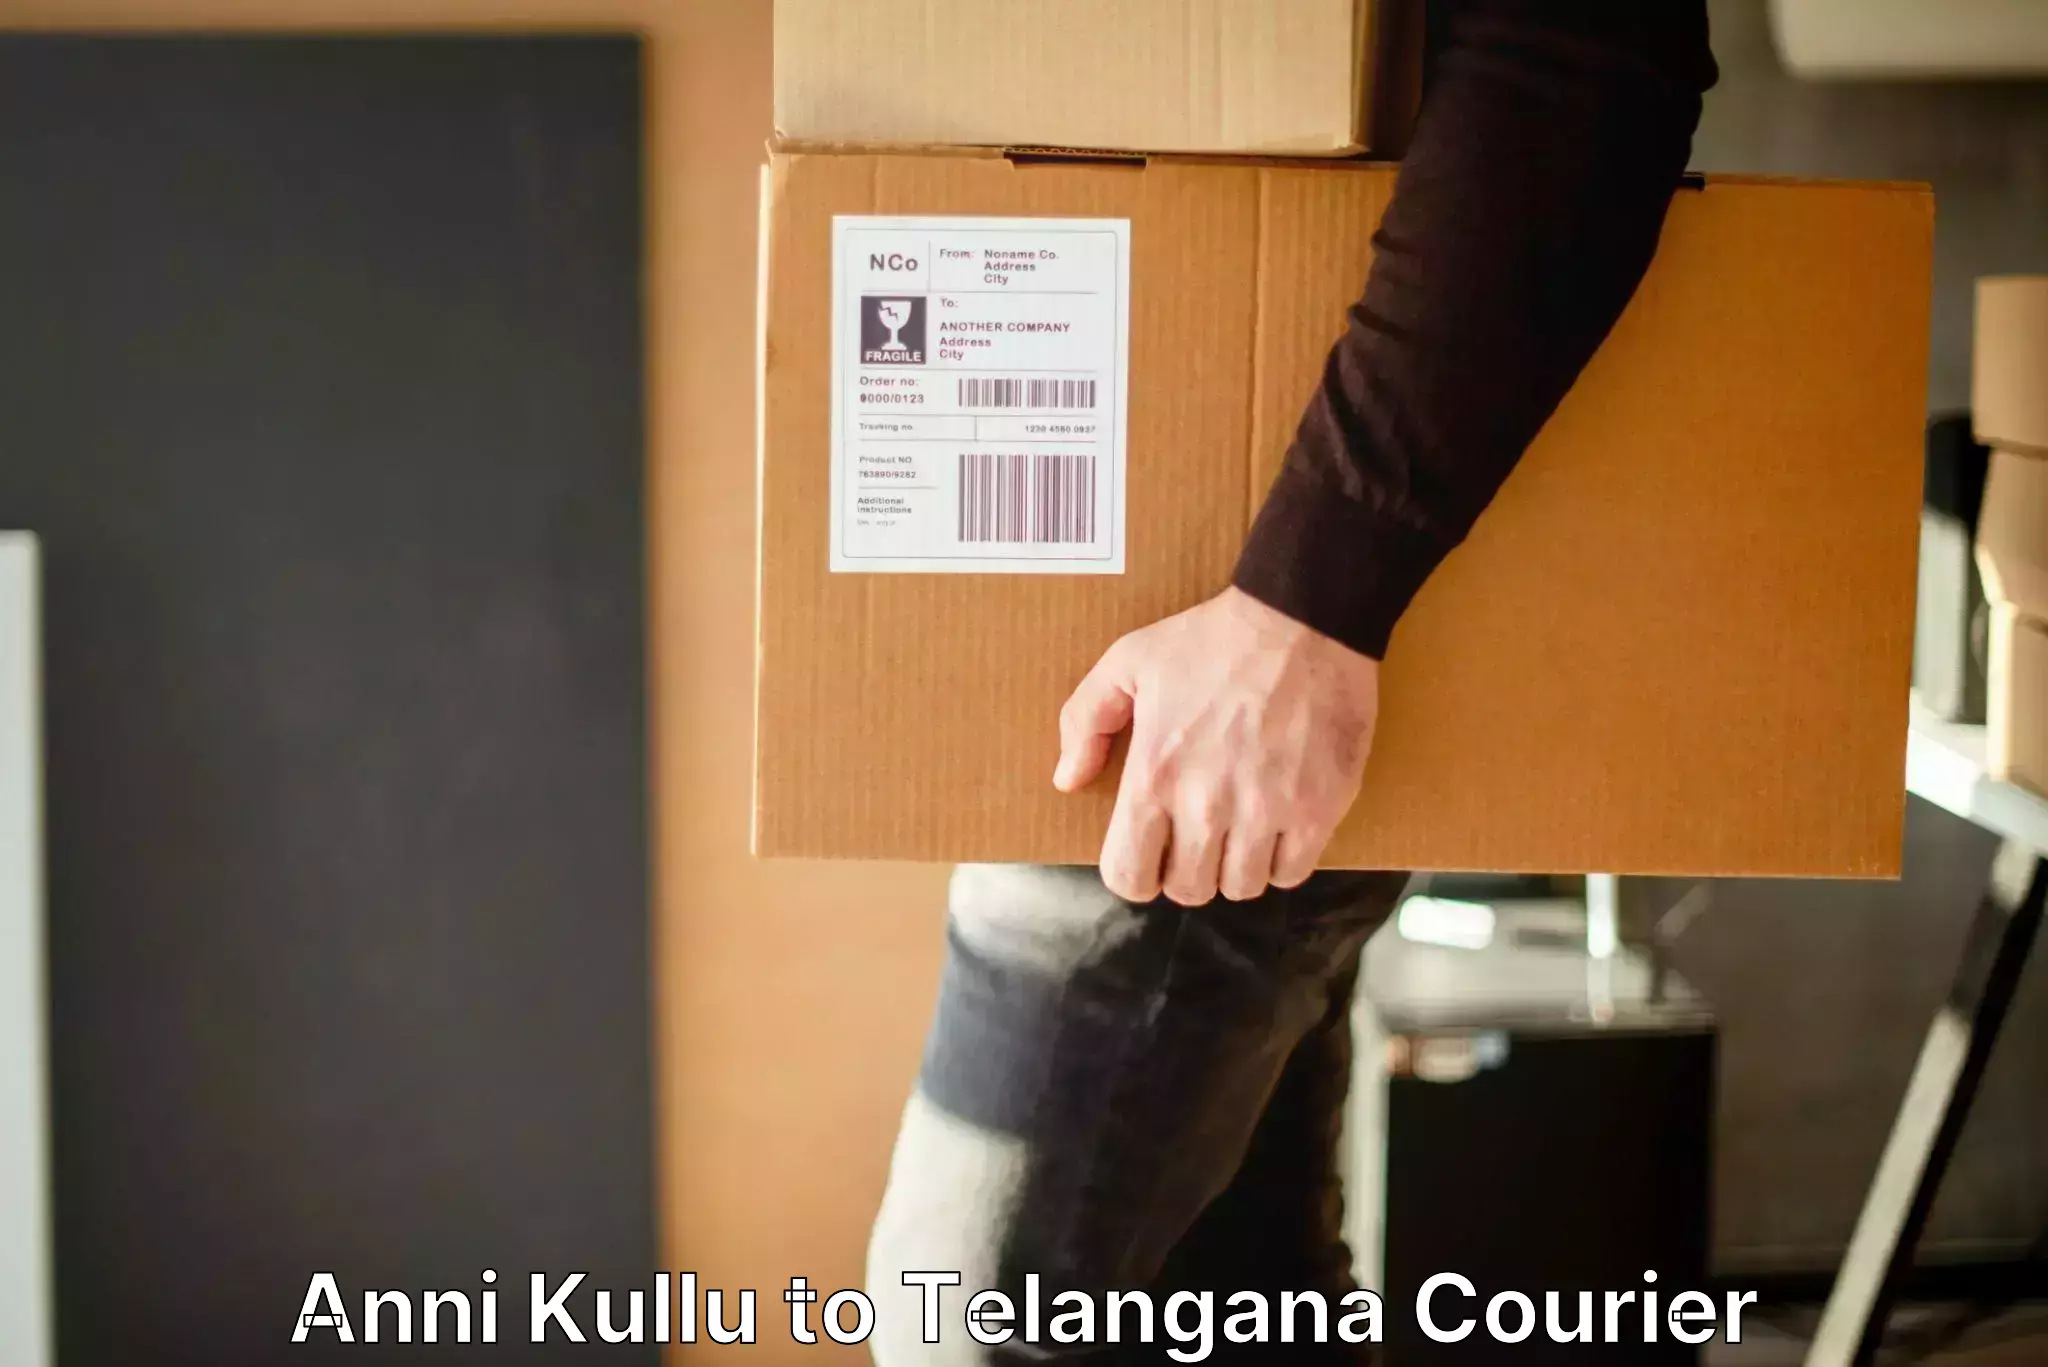 Luggage transport service Anni Kullu to Dubbak